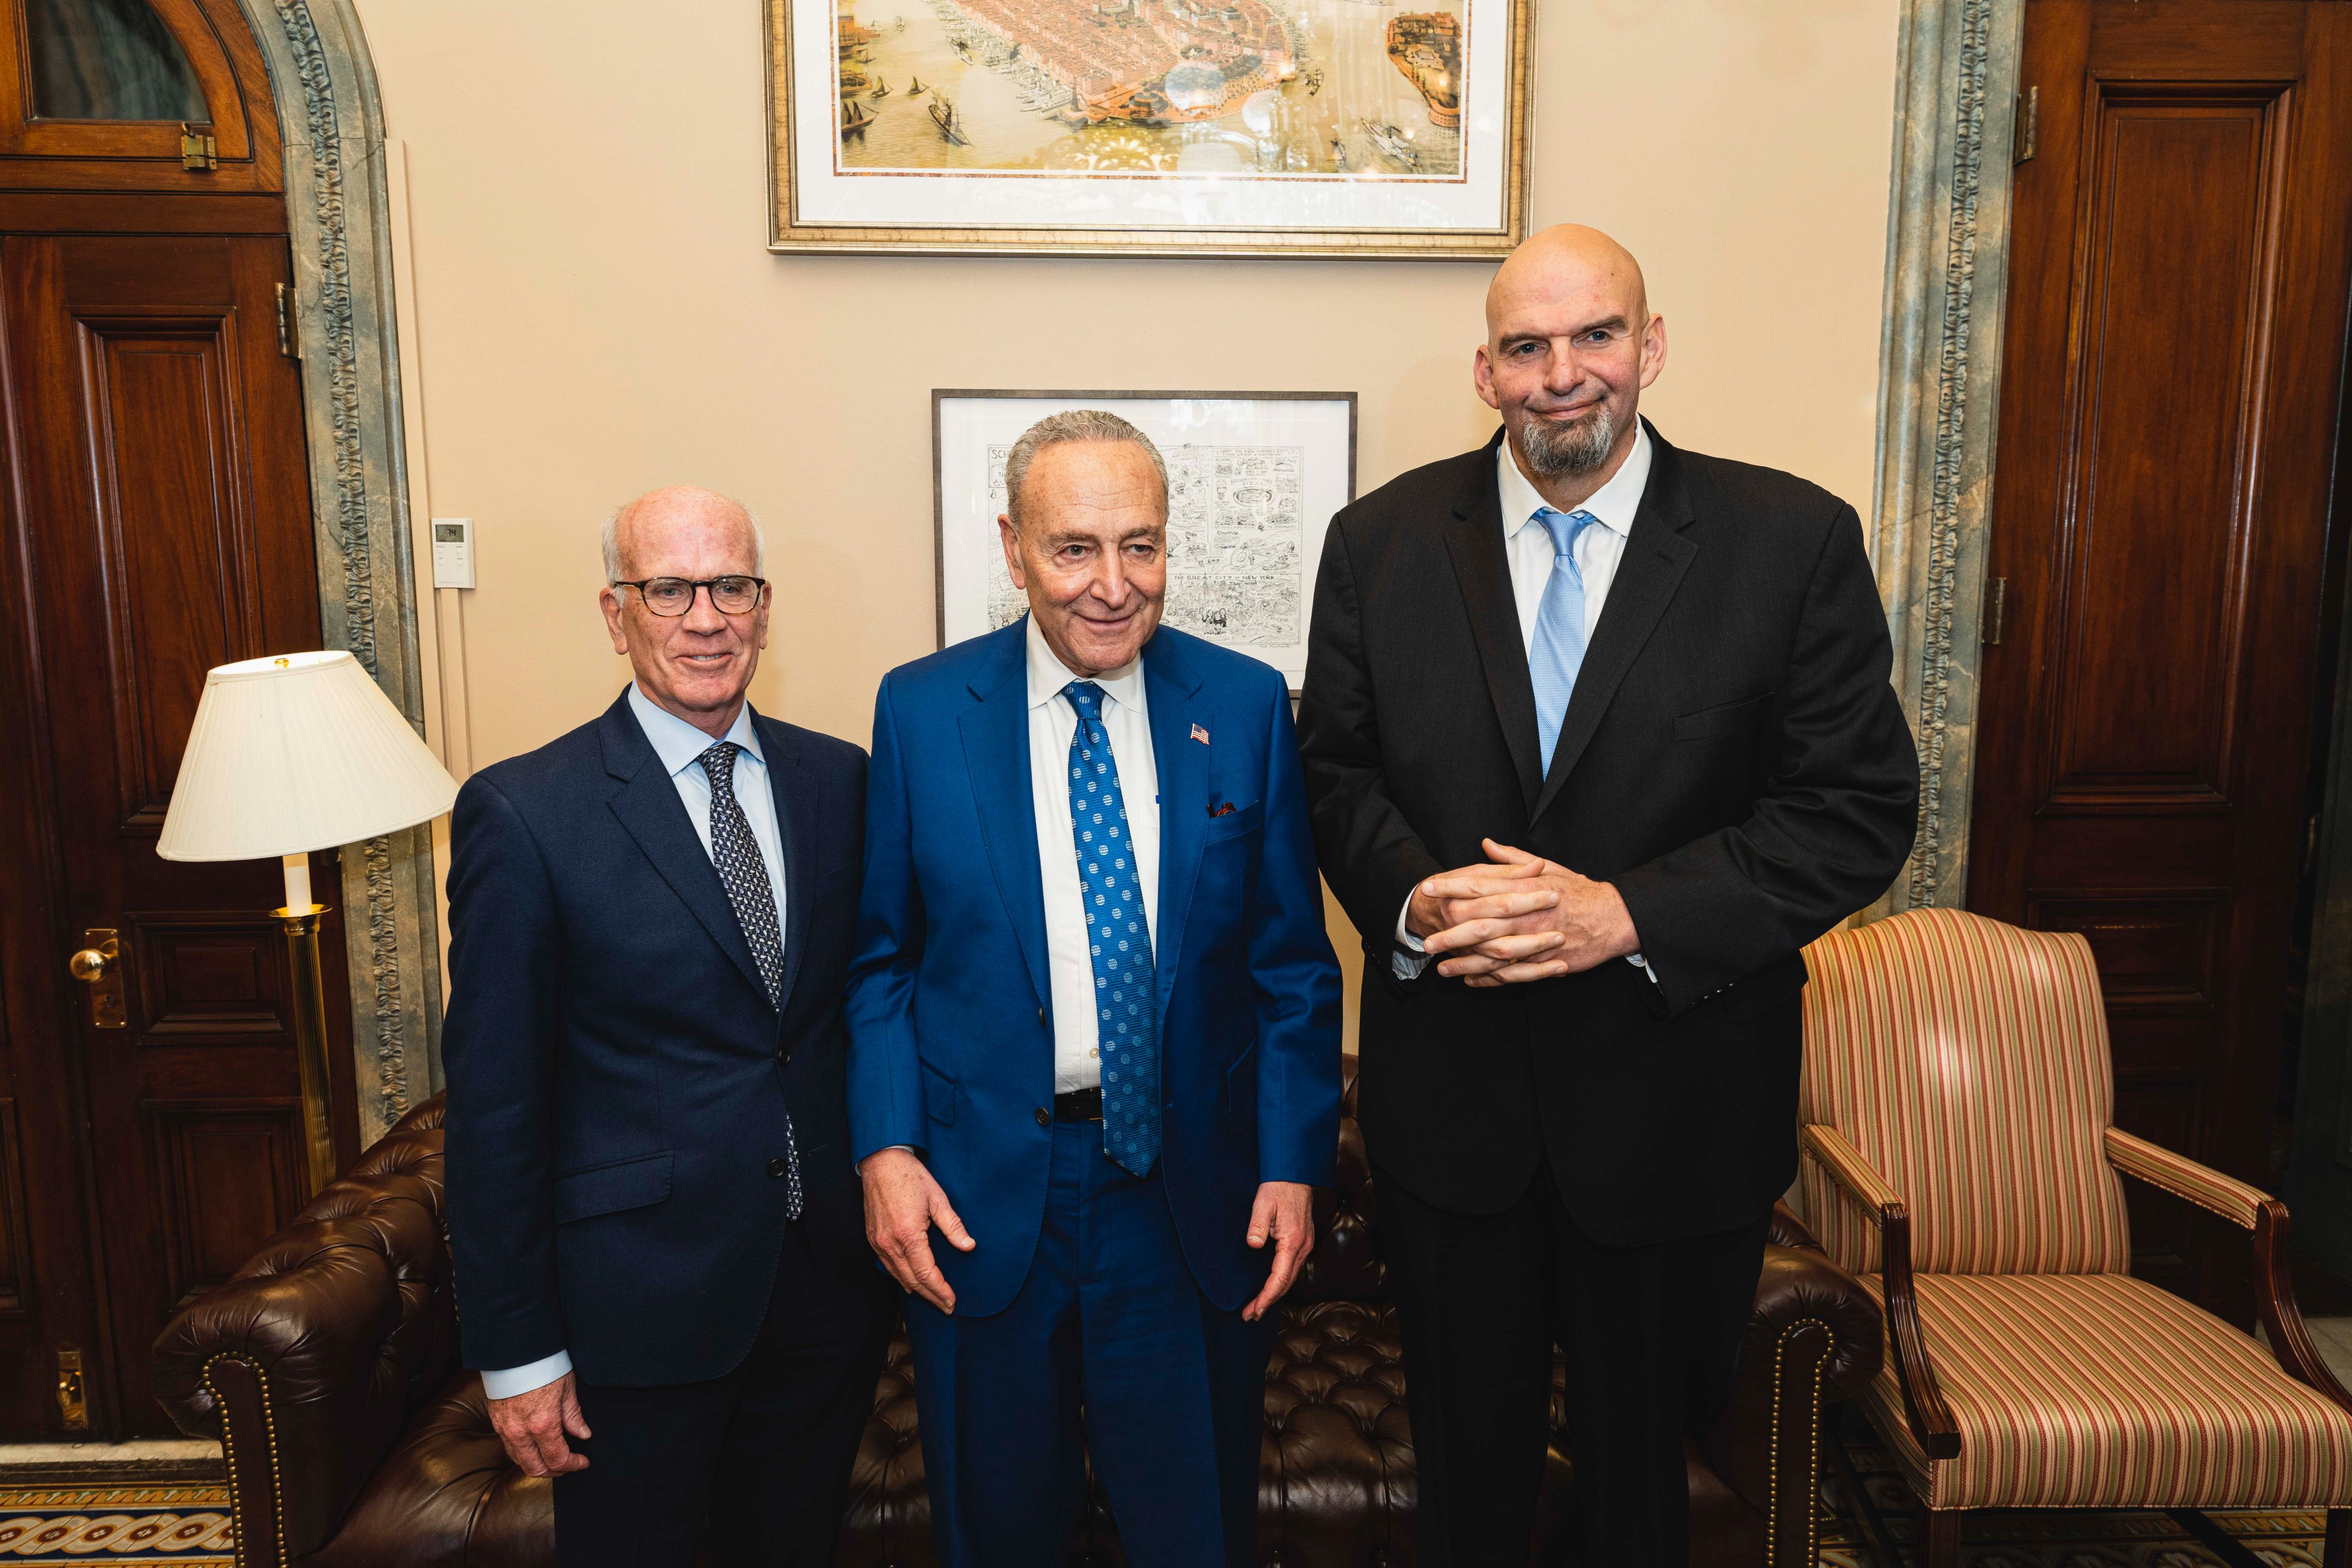 Senator Schumer meets with Senators-elect Peter Welch and John Fetterman, November 15, 2022.